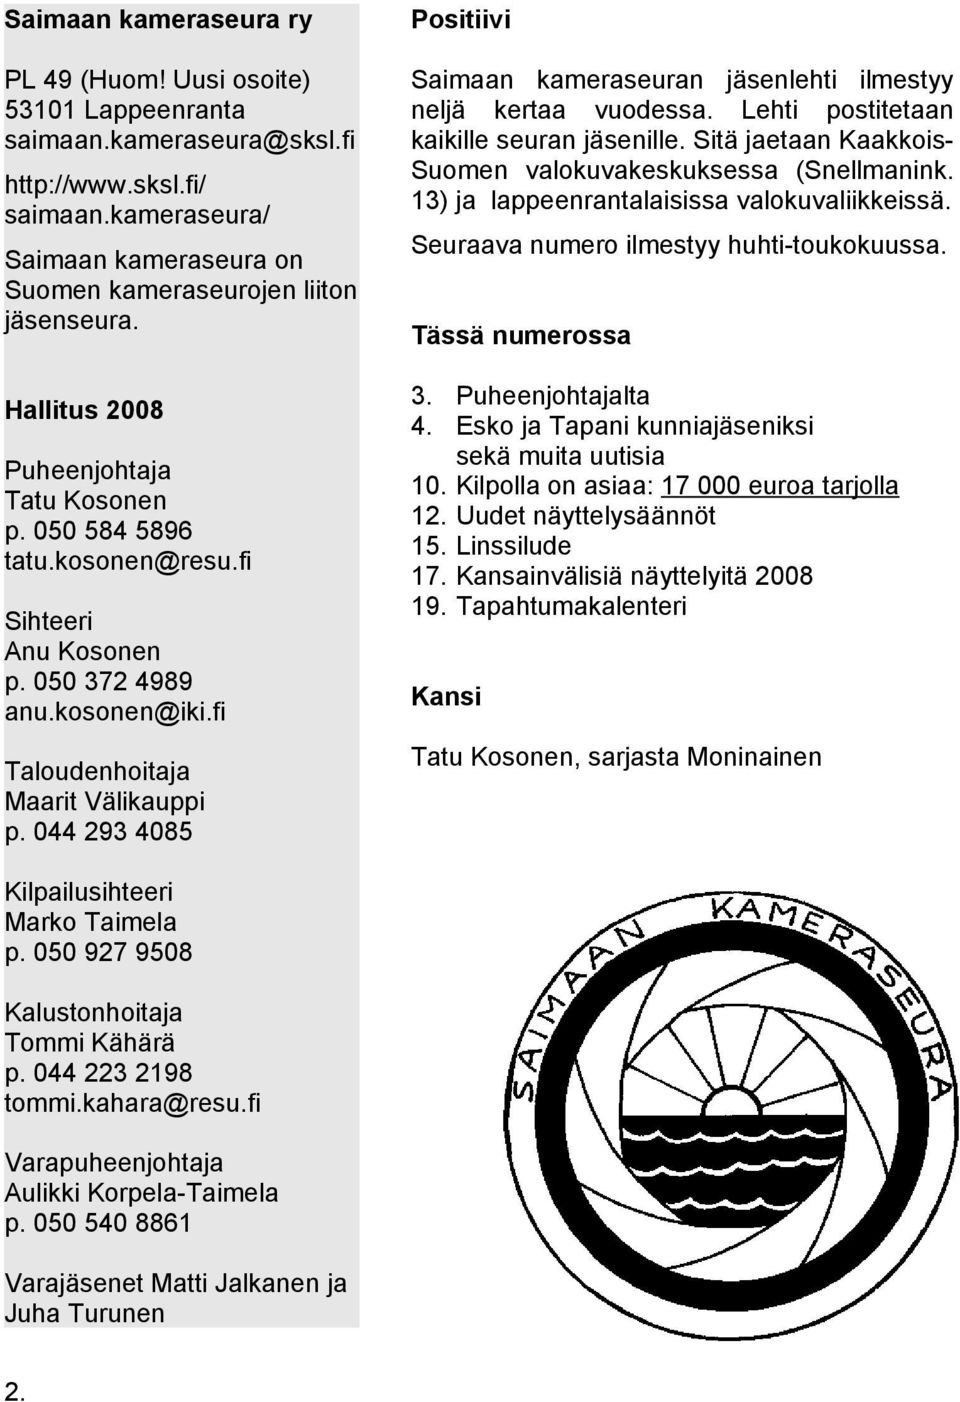 kameraseura/ Saimaan kameraseura on Suomen kameraseurojen liiton jäsenseura. Hallitus 2008 Puheenjohtaja Tatu Kosonen p. 050 584 5896 tatu.kosonen@resu.fi Sihteeri Anu Kosonen p. 050 372 4989 anu.